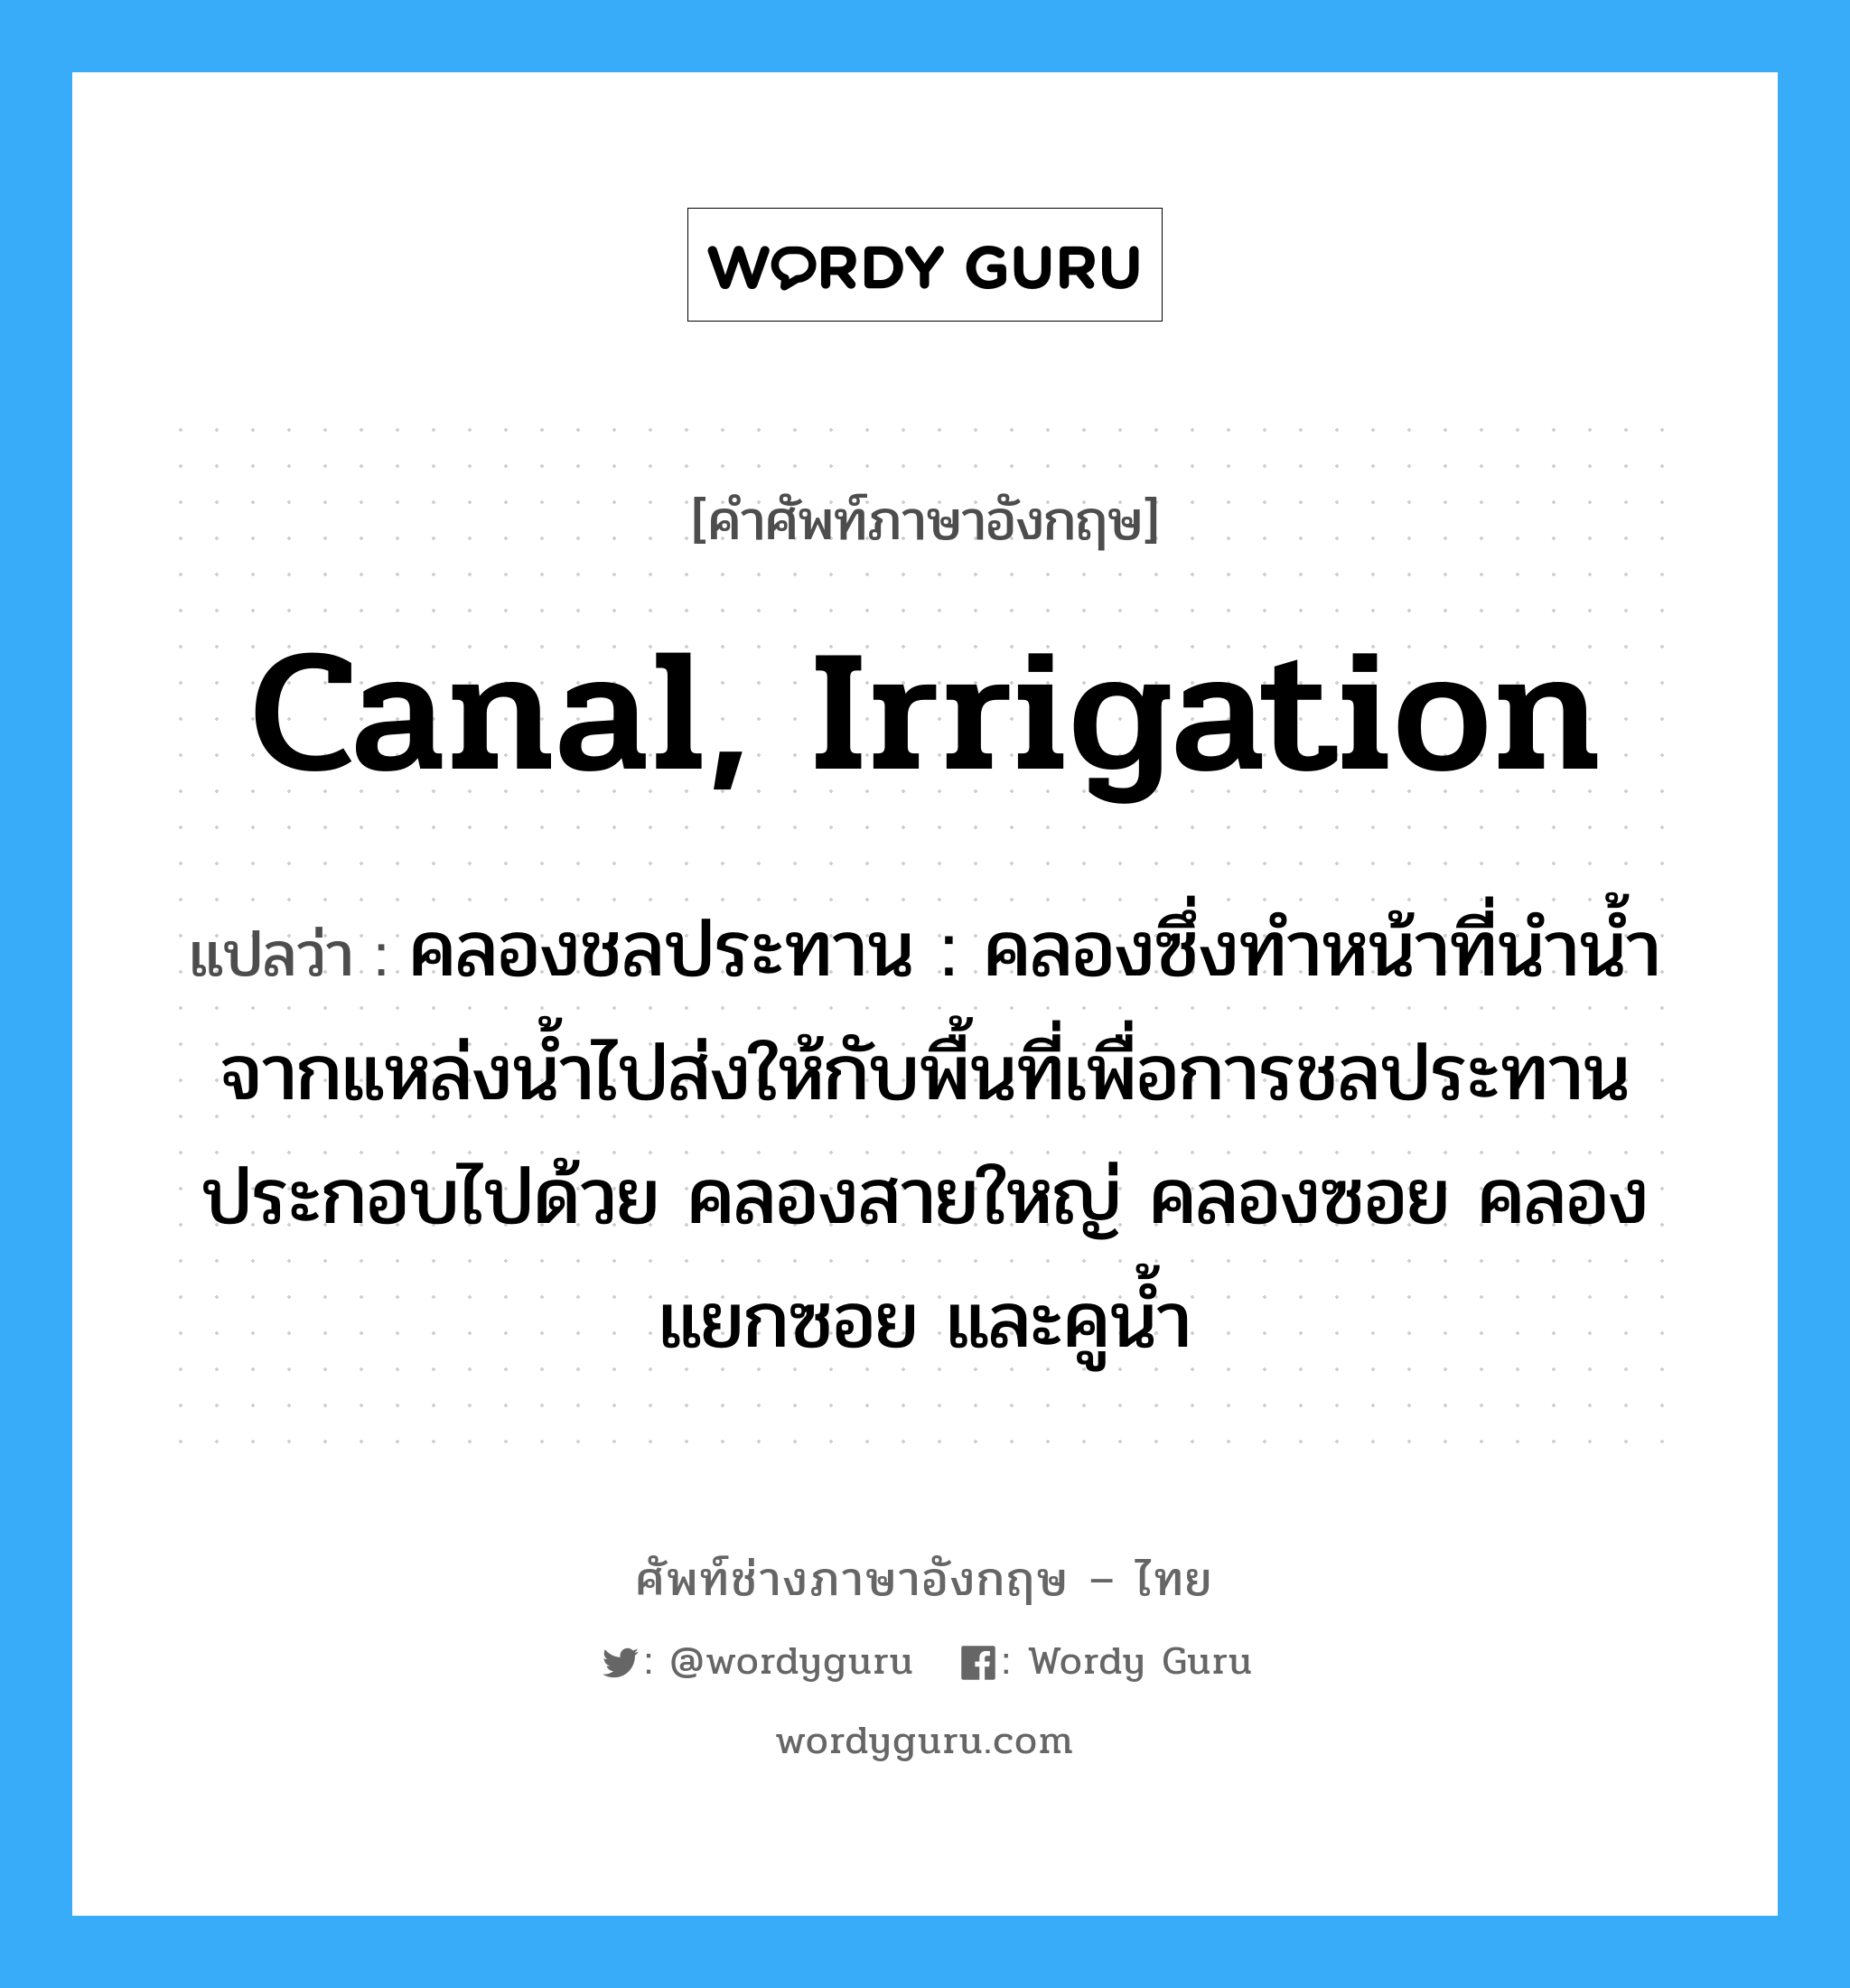 canal, irrigation แปลว่า?, คำศัพท์ช่างภาษาอังกฤษ - ไทย canal, irrigation คำศัพท์ภาษาอังกฤษ canal, irrigation แปลว่า คลองชลประทาน : คลองซึ่งทำหน้าที่นำน้ำจากแหล่งน้ำไปส่งให้กับพื้นที่เพื่อการชลประทานประกอบไปด้วย คลองสายใหญ่ คลองซอย คลองแยกซอย และคูน้ำ